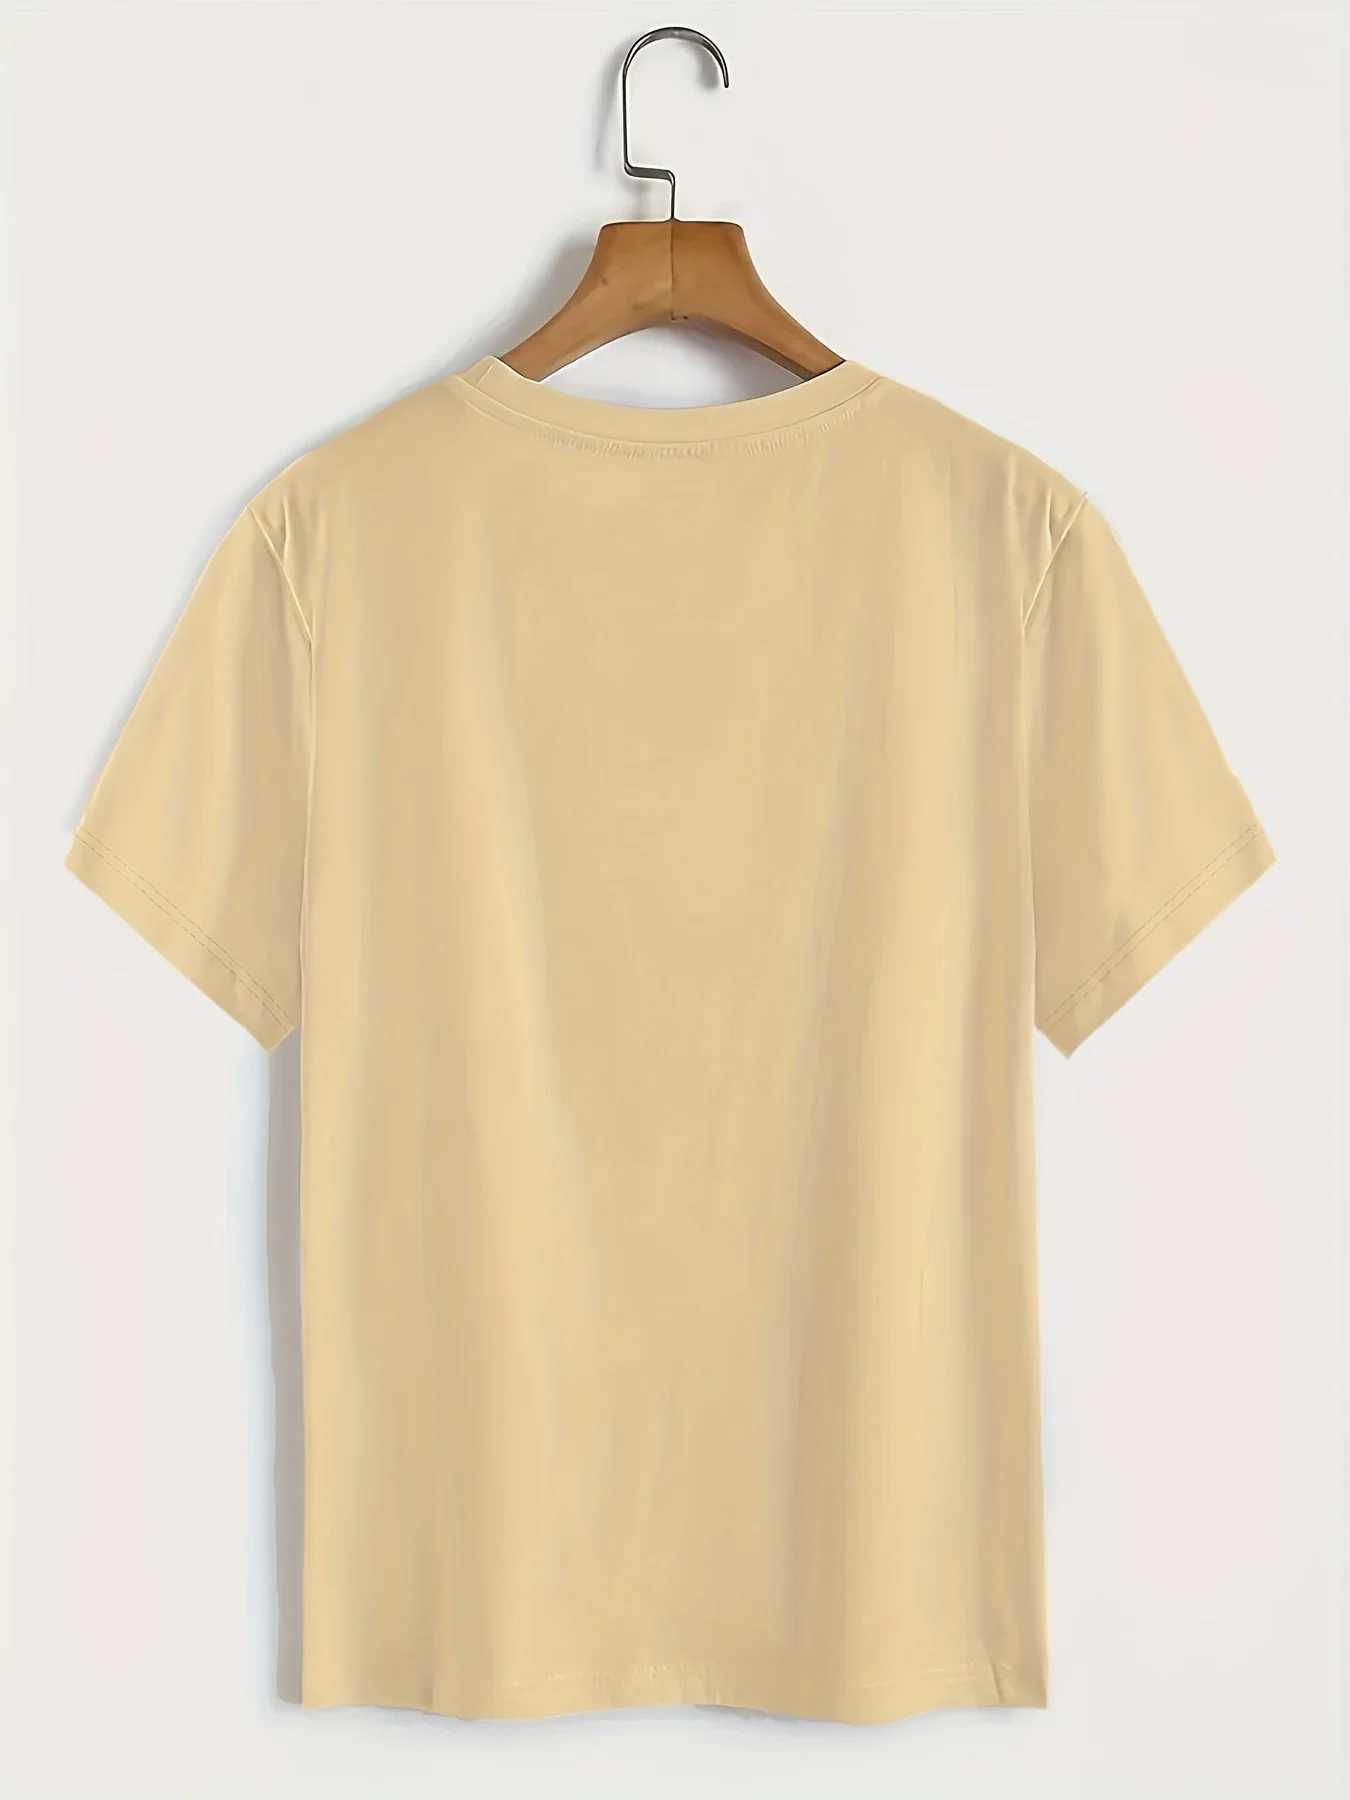 T-shirt féminin 100% coton pur surdimension